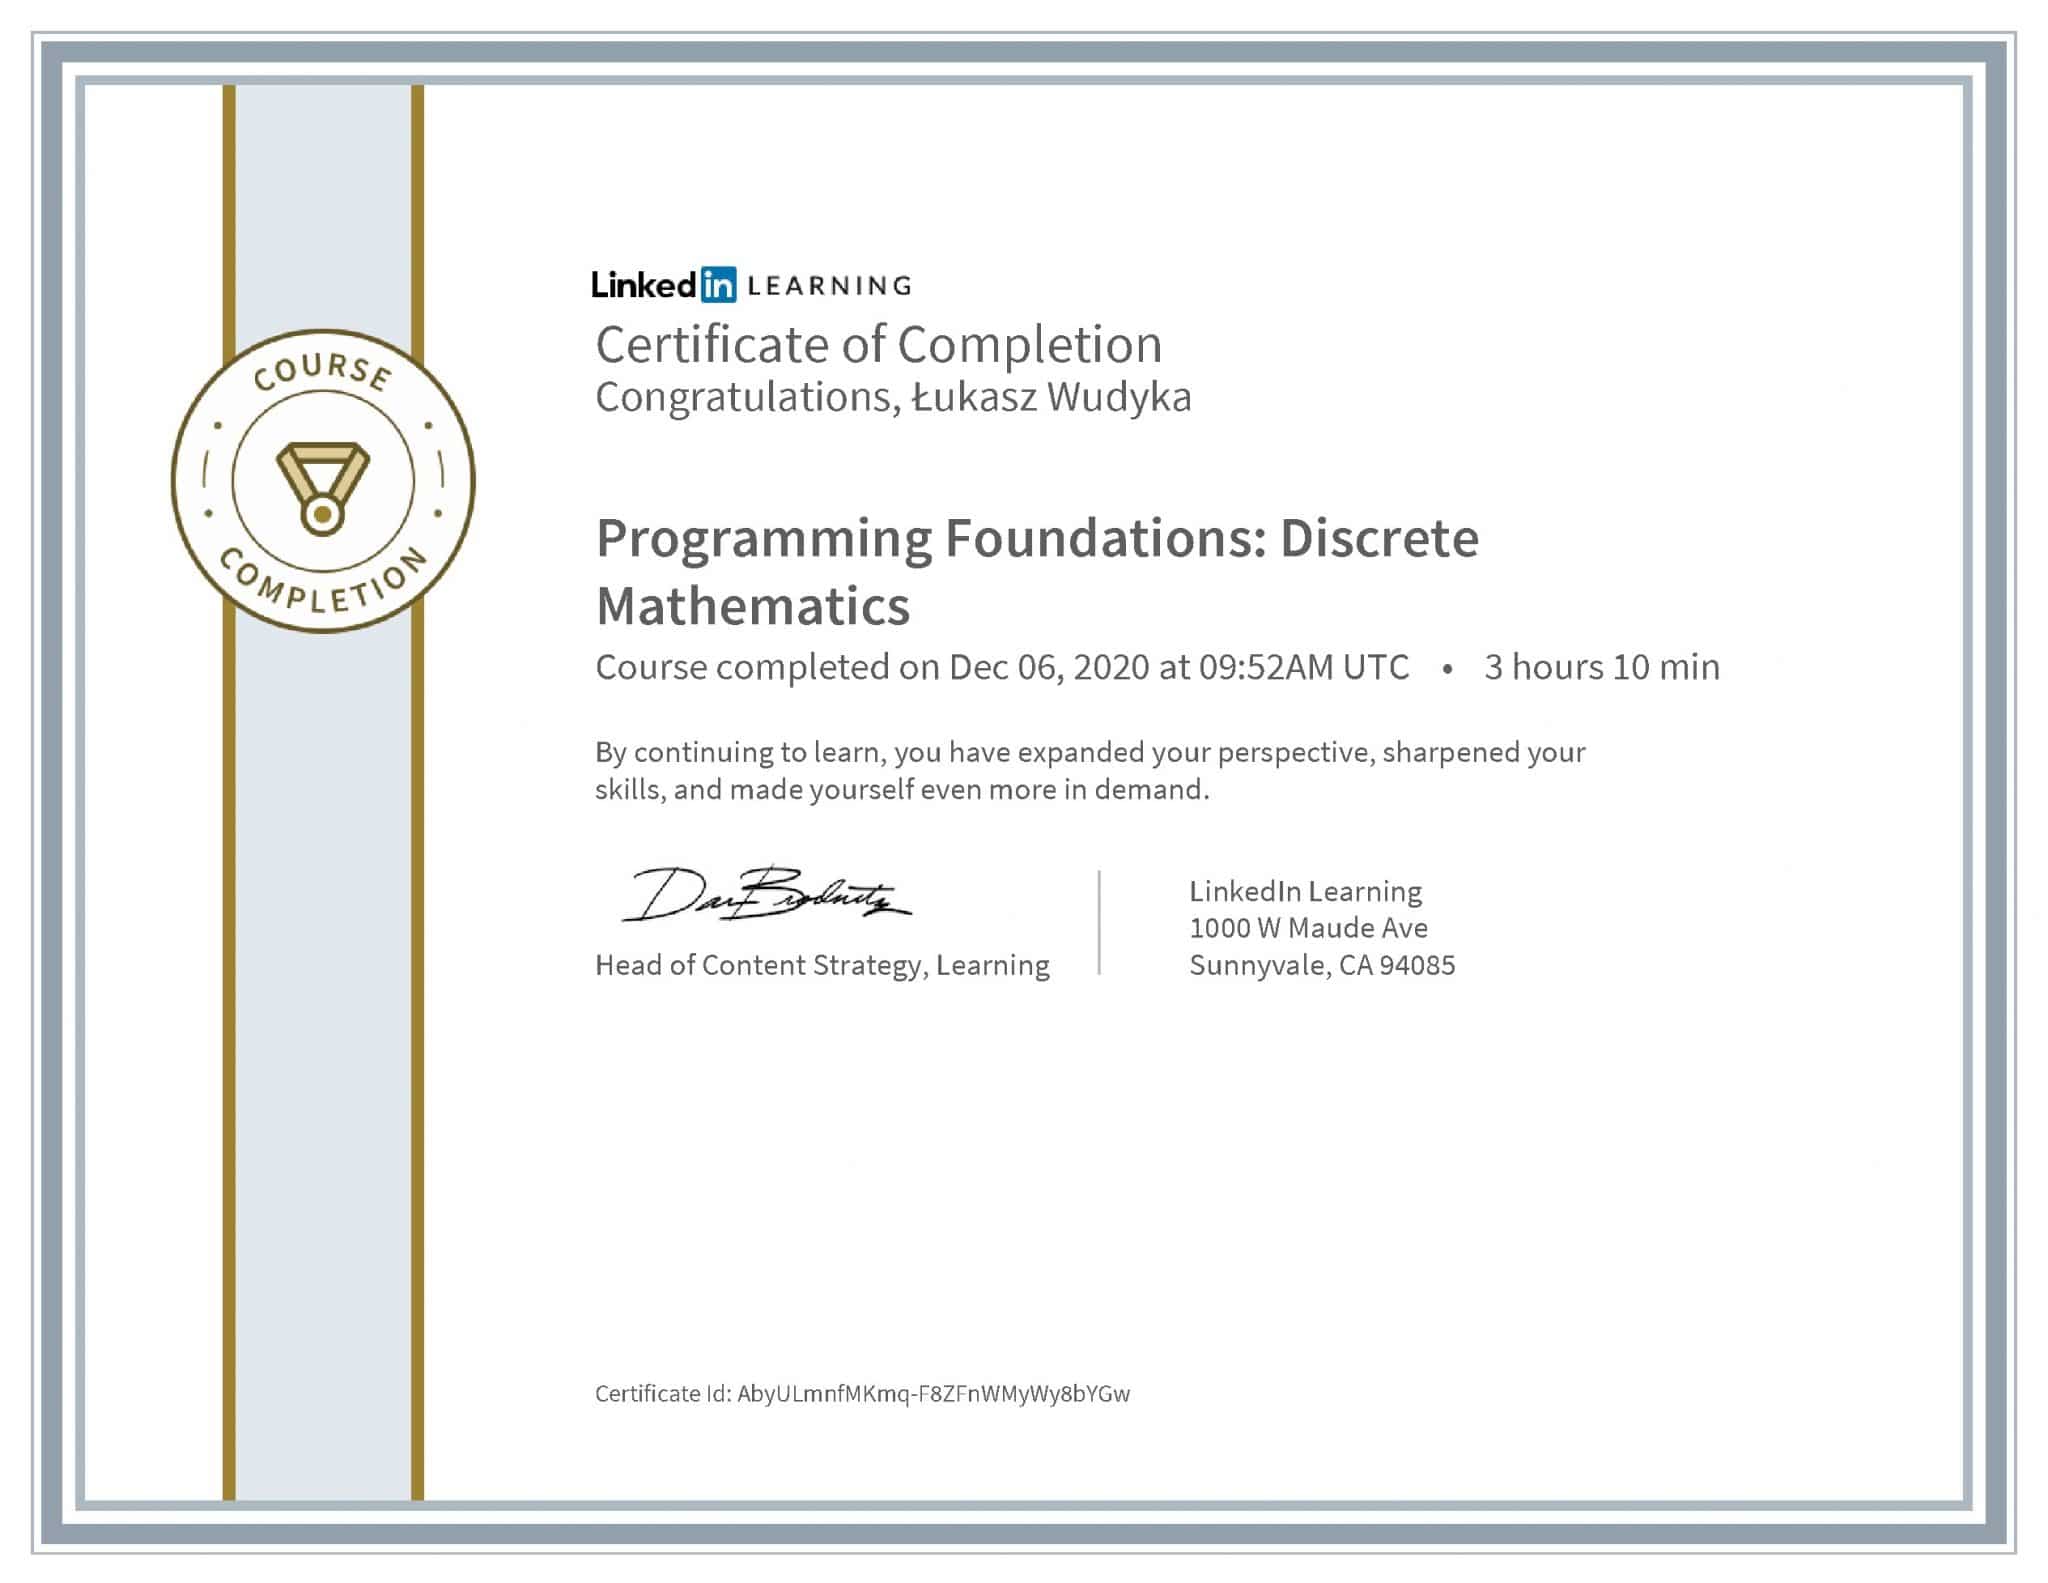 Łukasz Wudyka certyfikat LinkedIn Programming Foundations: Discrete Mathematics